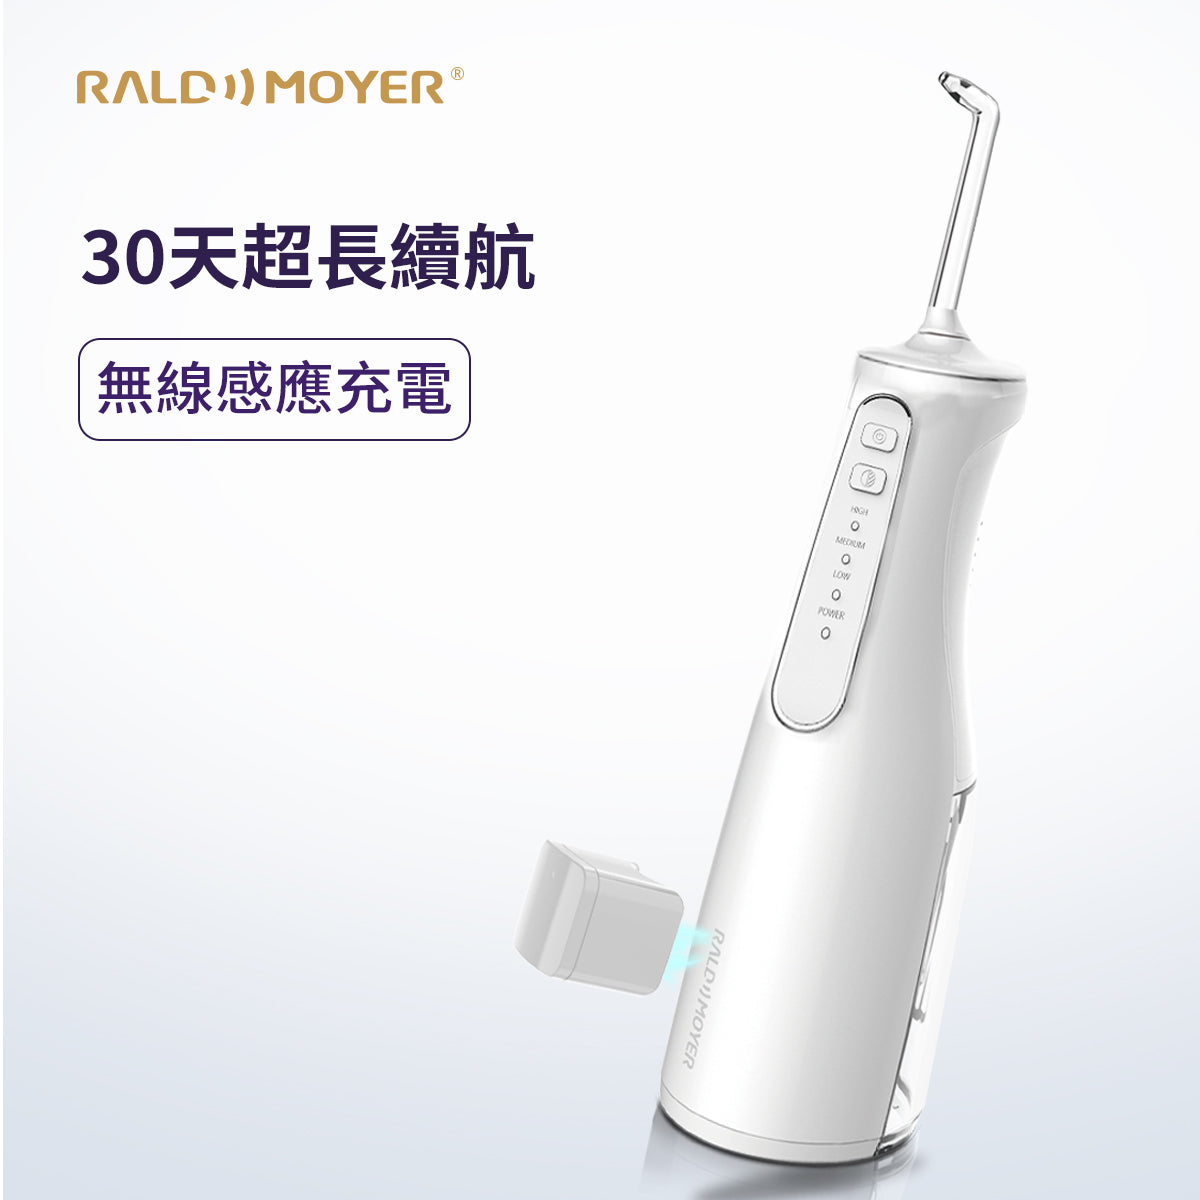 Rald Moyer AT120 無線型水牙線機沖牙機沖牙器 防水防滑 箍牙人士推薦使用